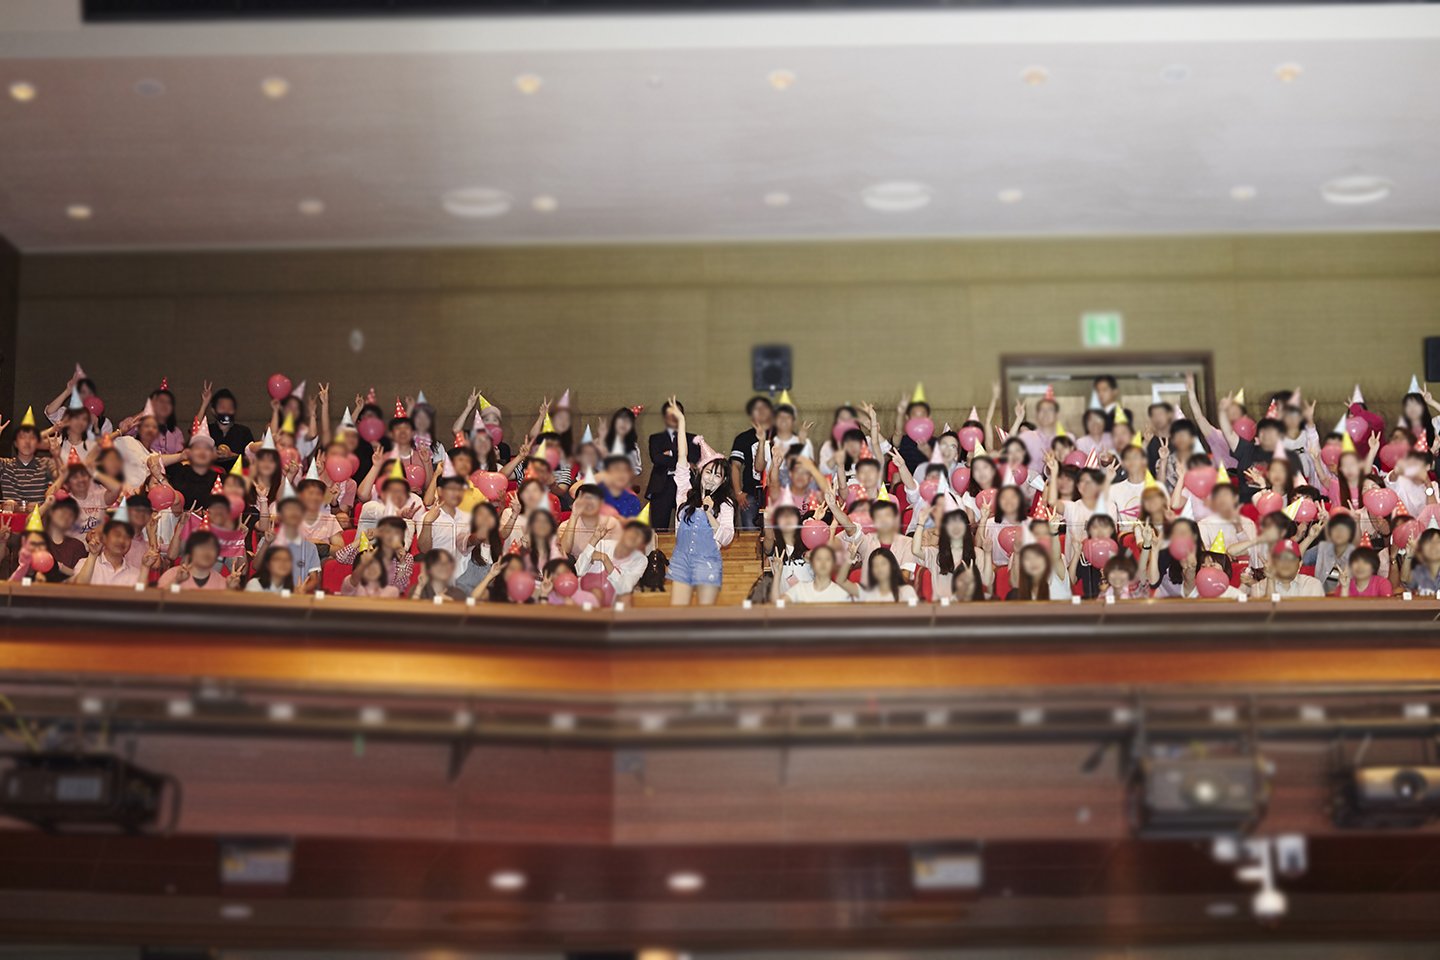 [PIC][01-08-2015]Tiffany tham dự "Tiffany's Birthday Party" tại SM COEX Artium vào hôm nay - Page 2 GQ9WbYCjke-3000x3000